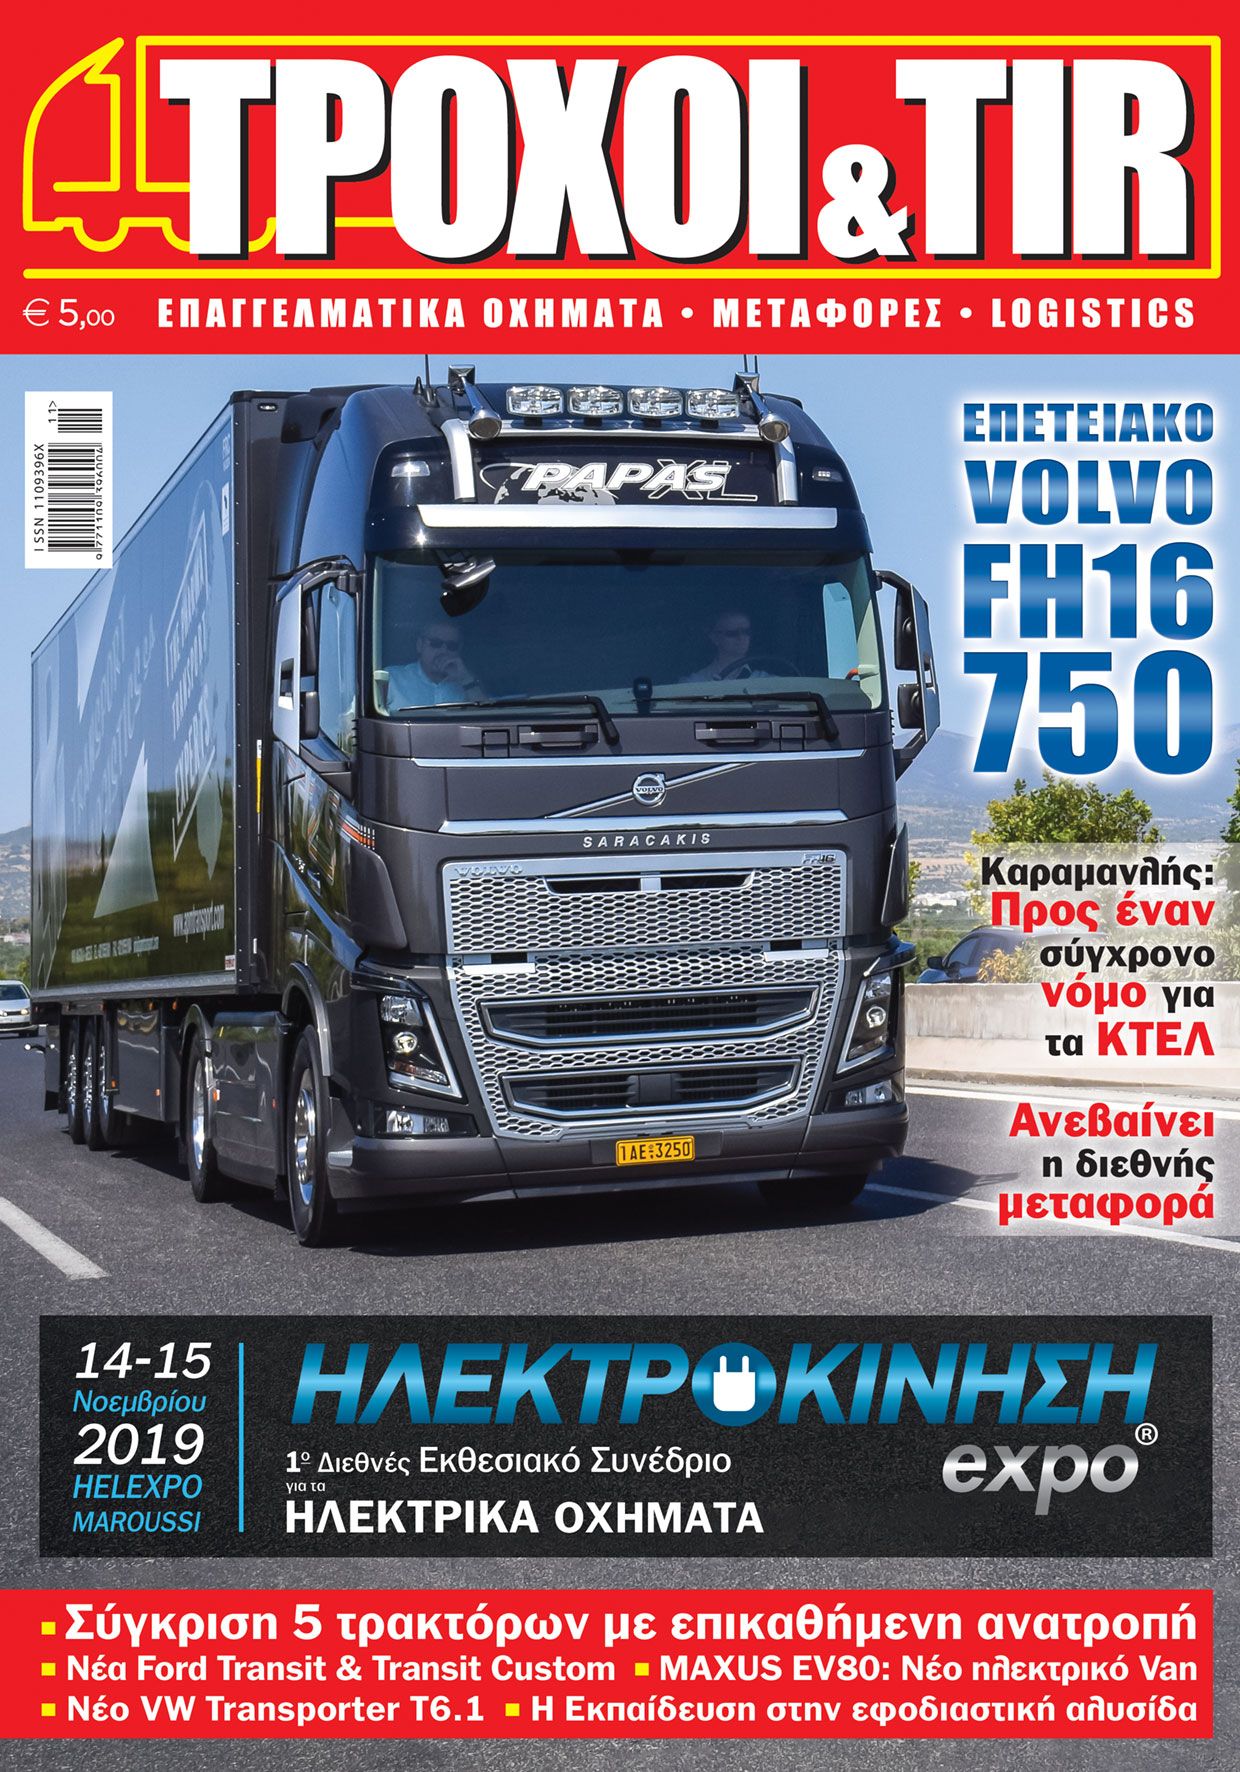 Troxoikaitir issue 378 october 2019 cover